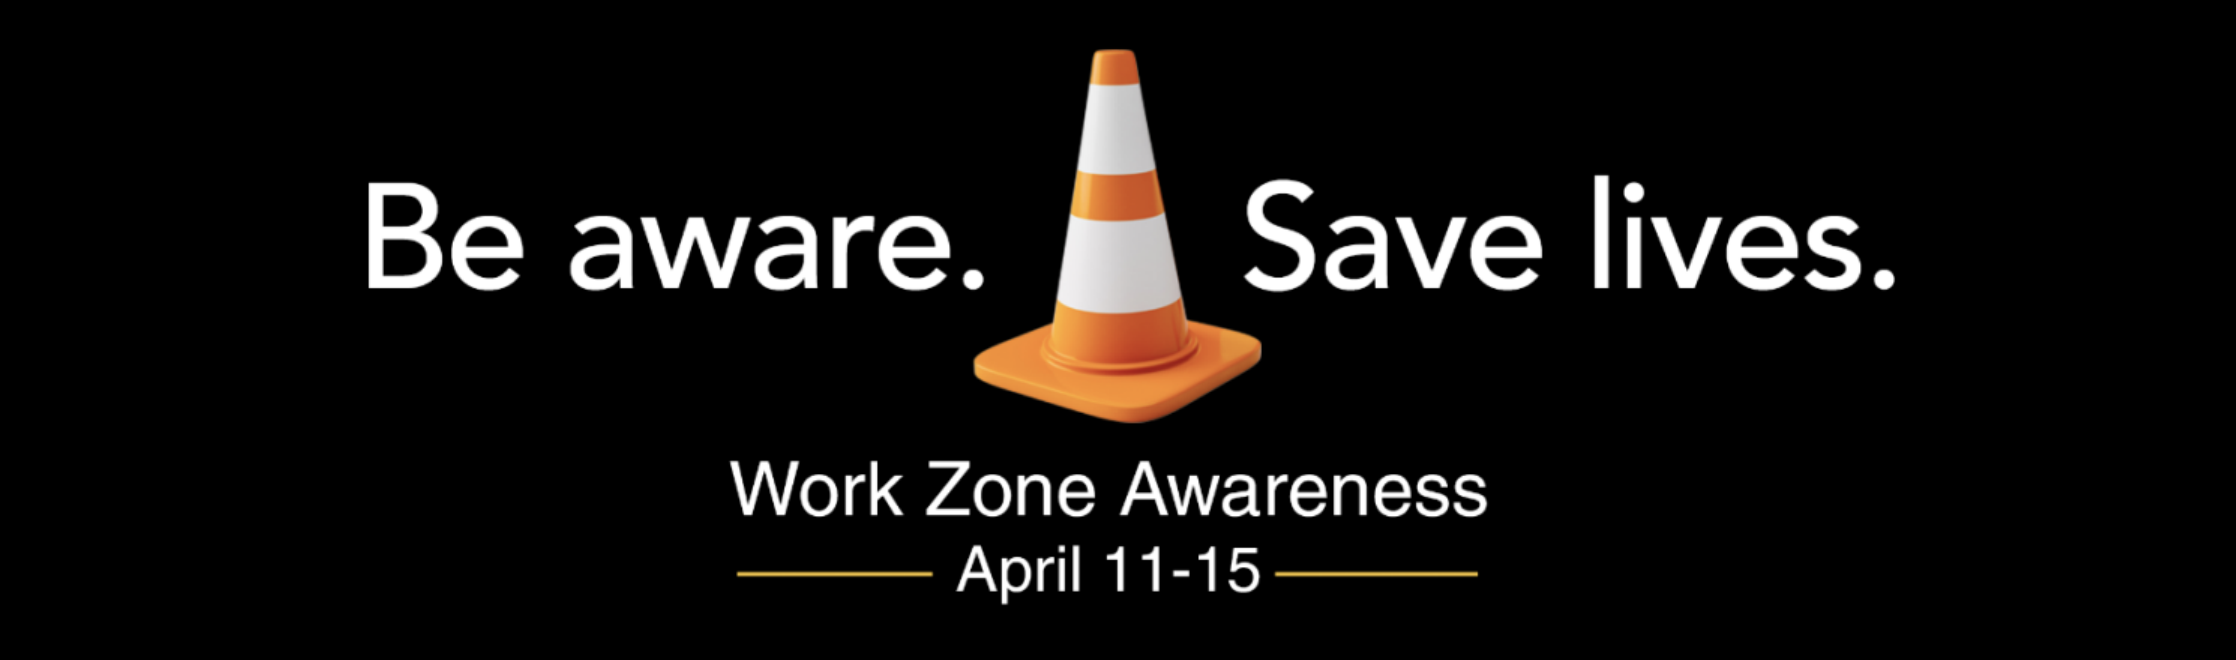 Be aware. Be alive.  Work Zone Awareness April 11 - 15